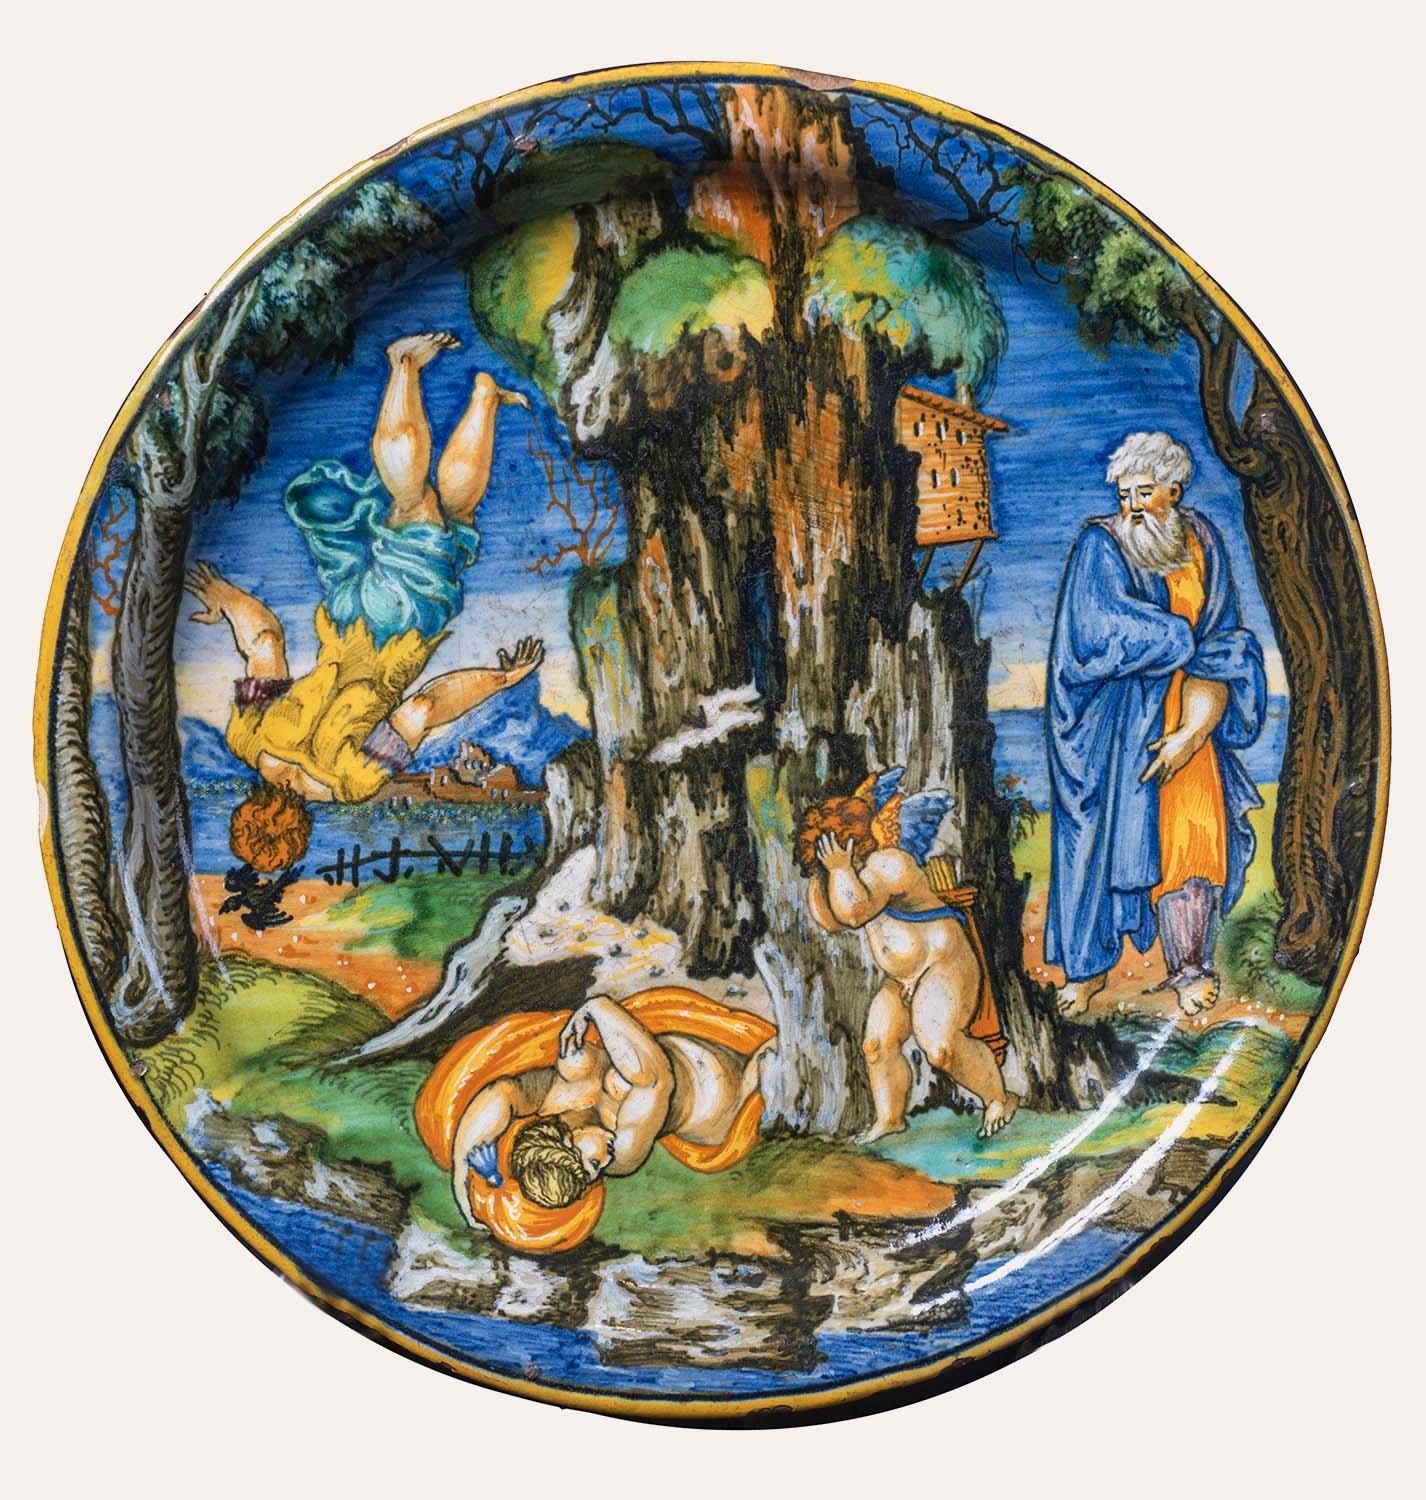 The dish with the myth of Aesacus by Francesco Xanto Avelli